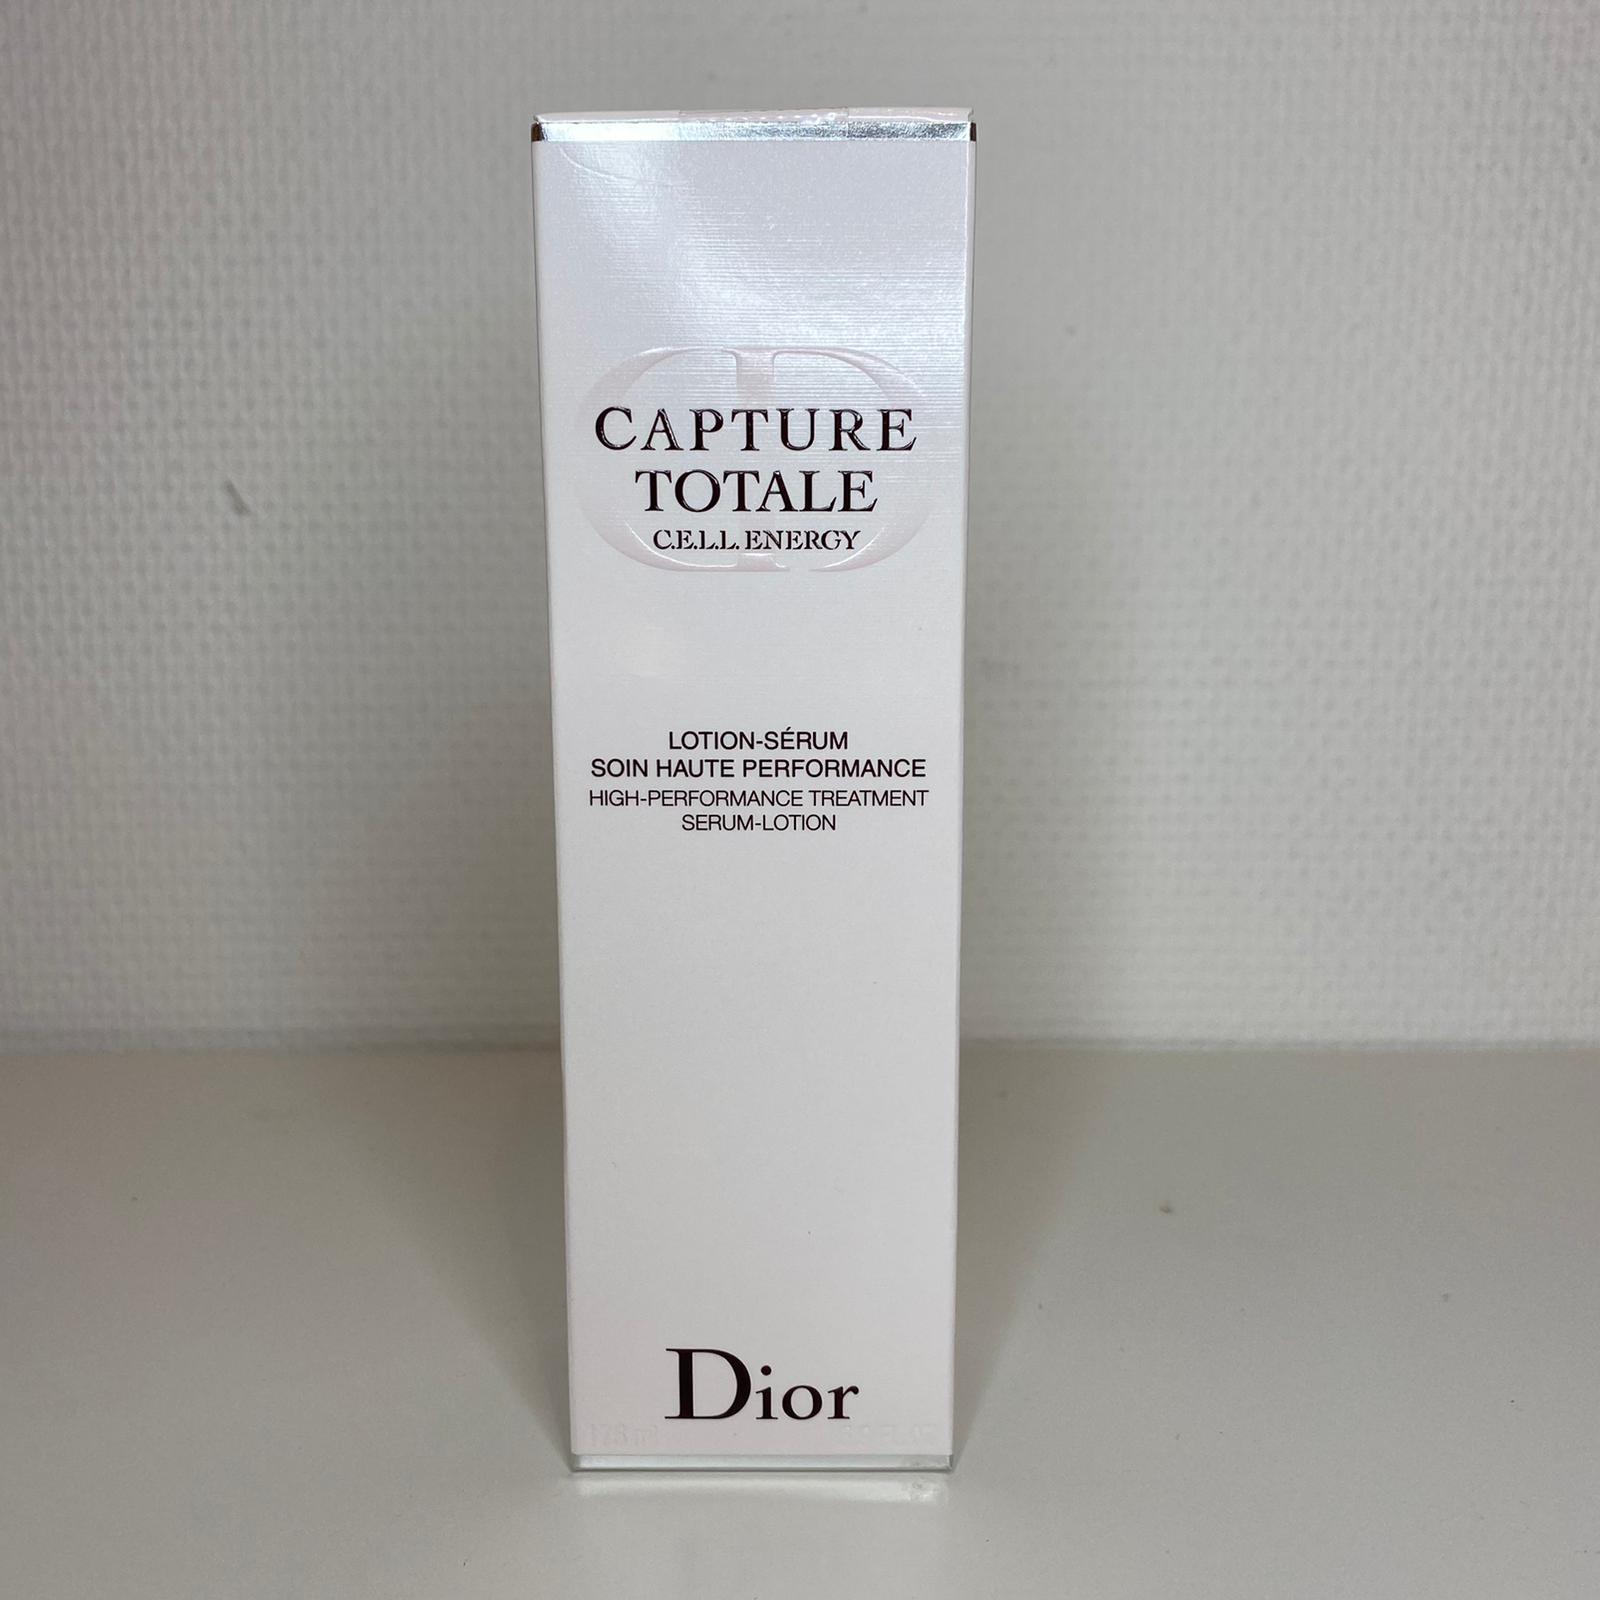 Dior capture totale lotion serum 175 ml